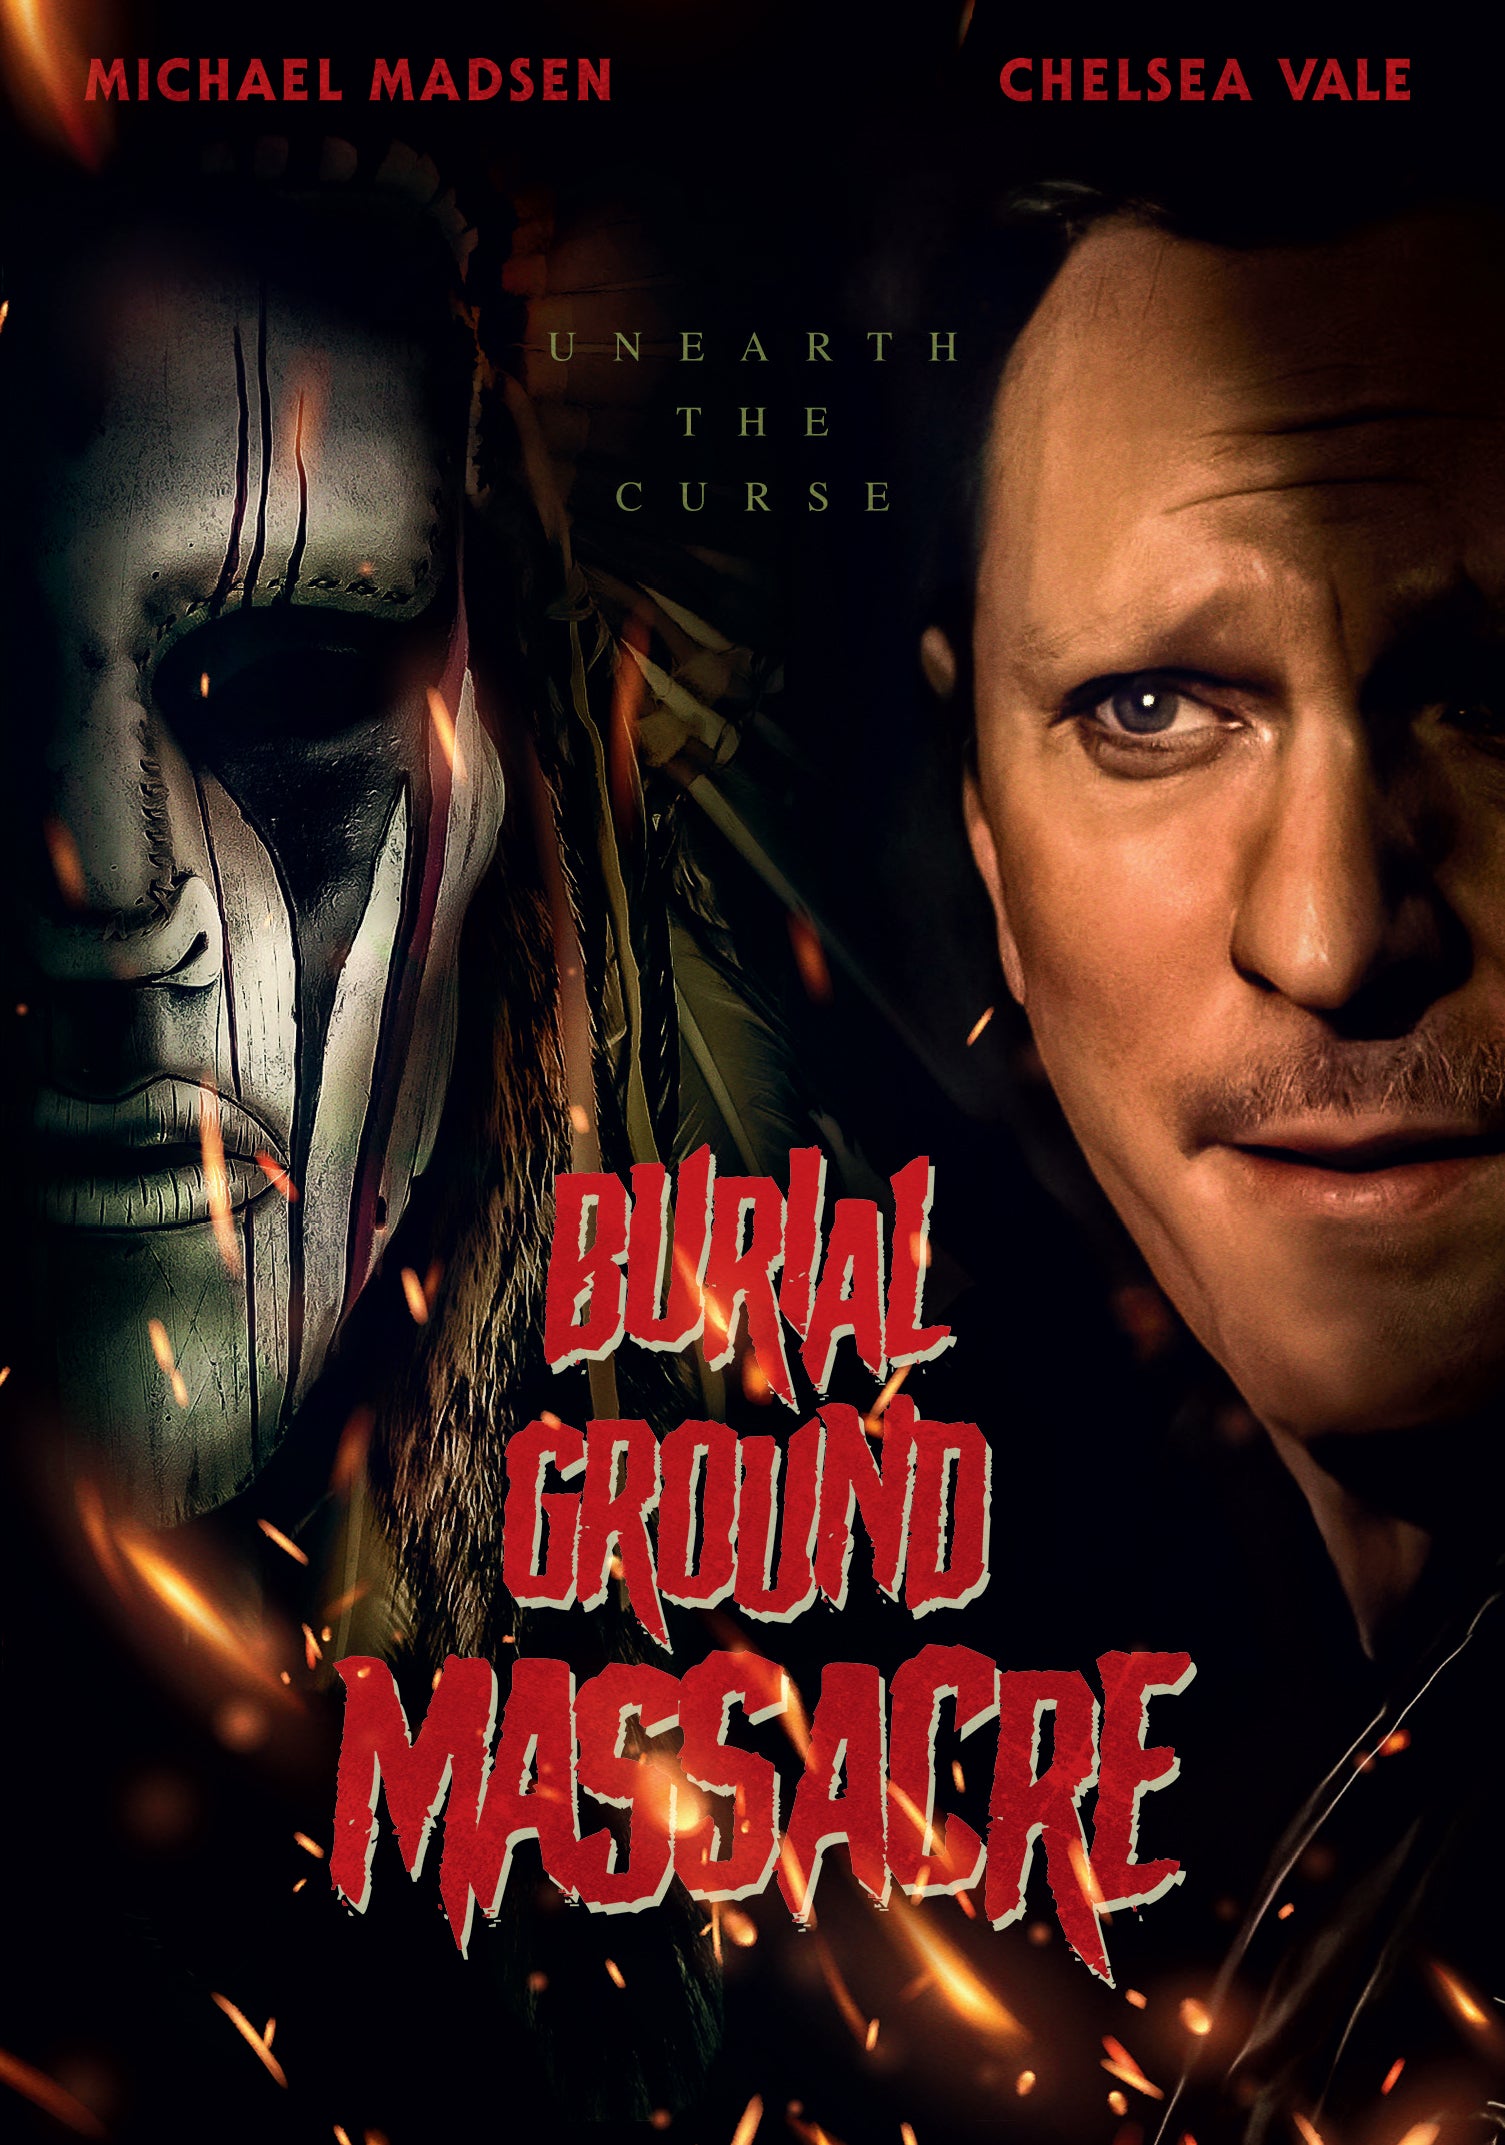 BURIAL GROUND MASSACRE DVD